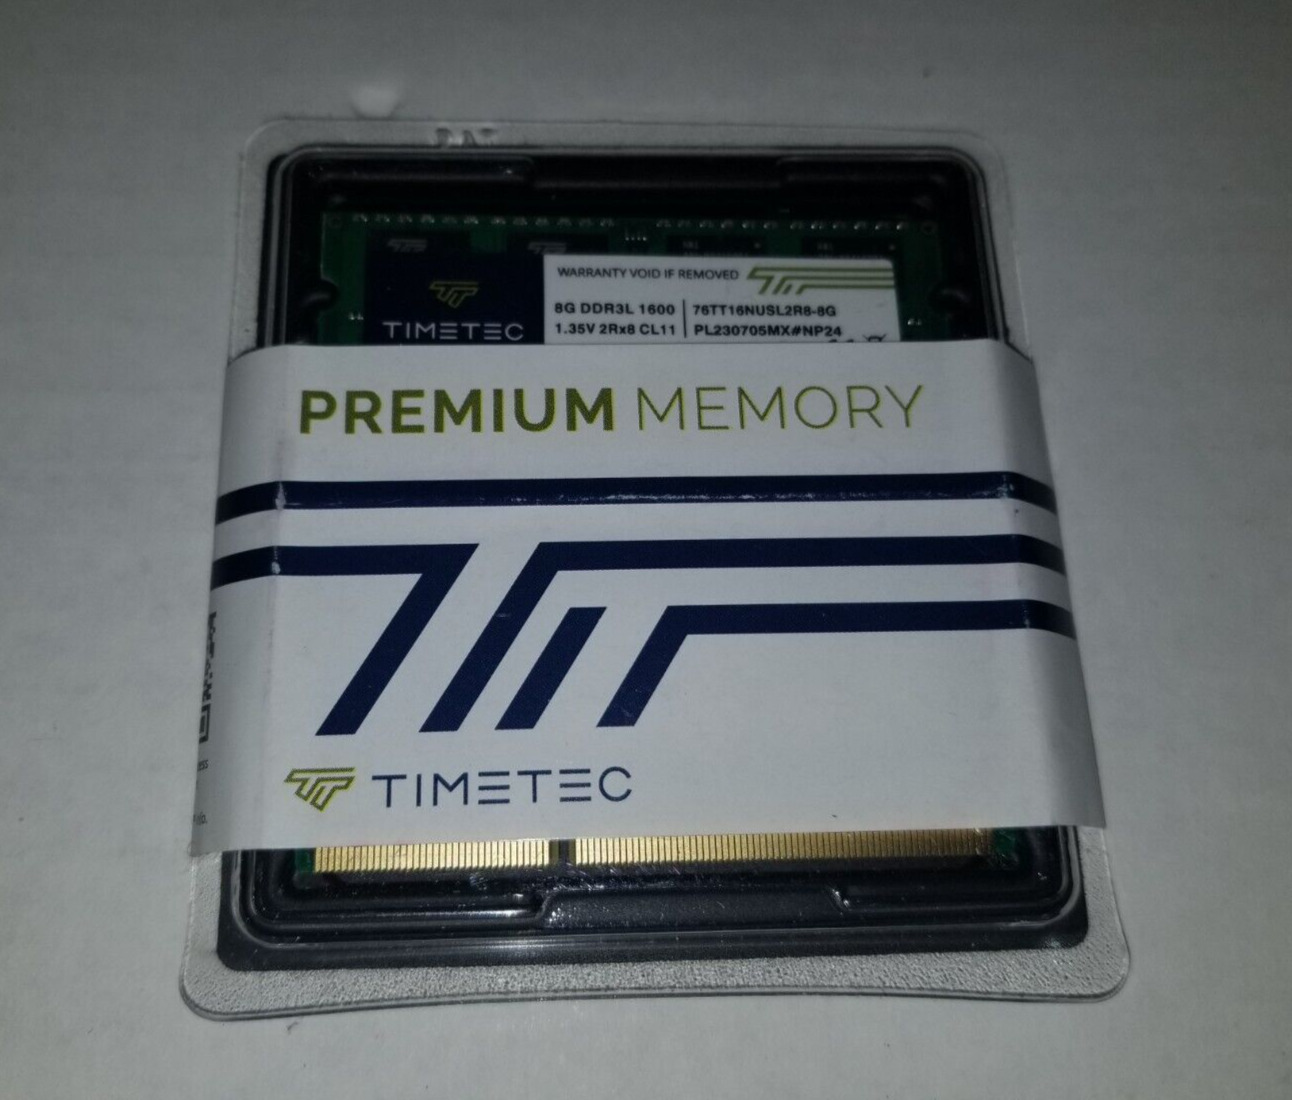 Timetec Hynix 16GB (2 x 8GB) DDR3 1600 (PC3 12800) Memory (76TT16NUSL2R8-8G) RAM